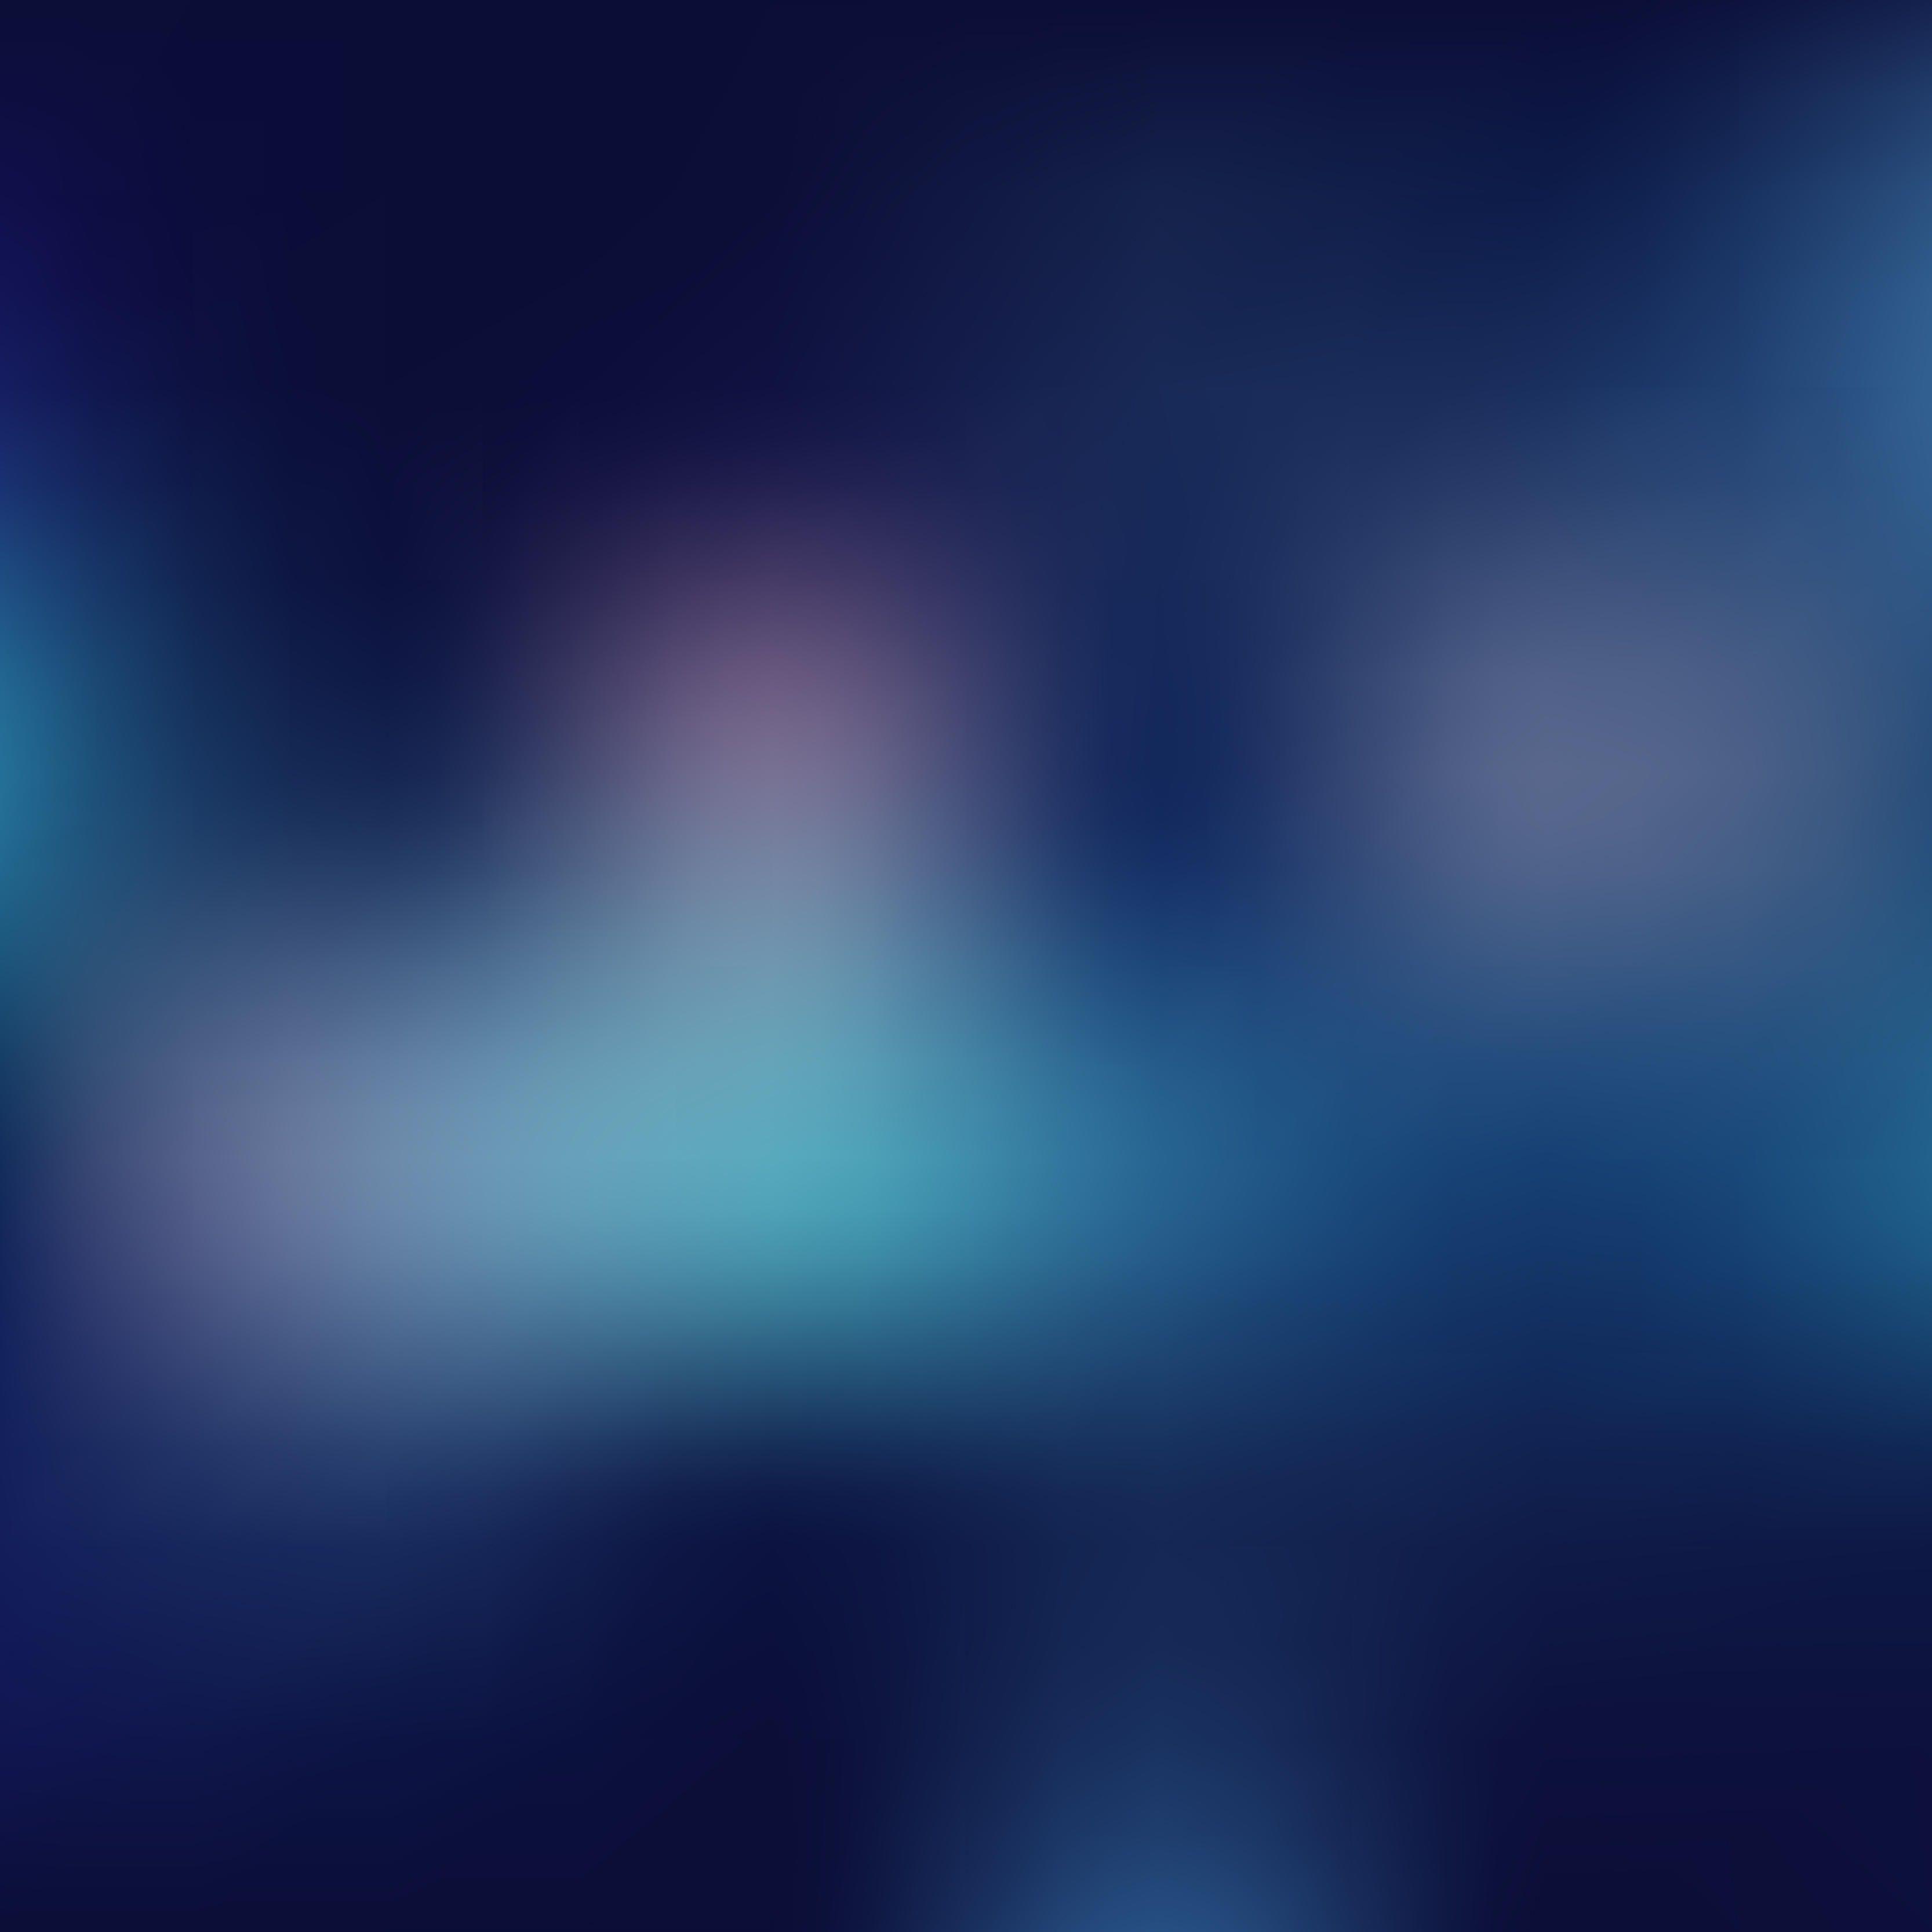 Blurred Dark Blue BackgroundFreevectors